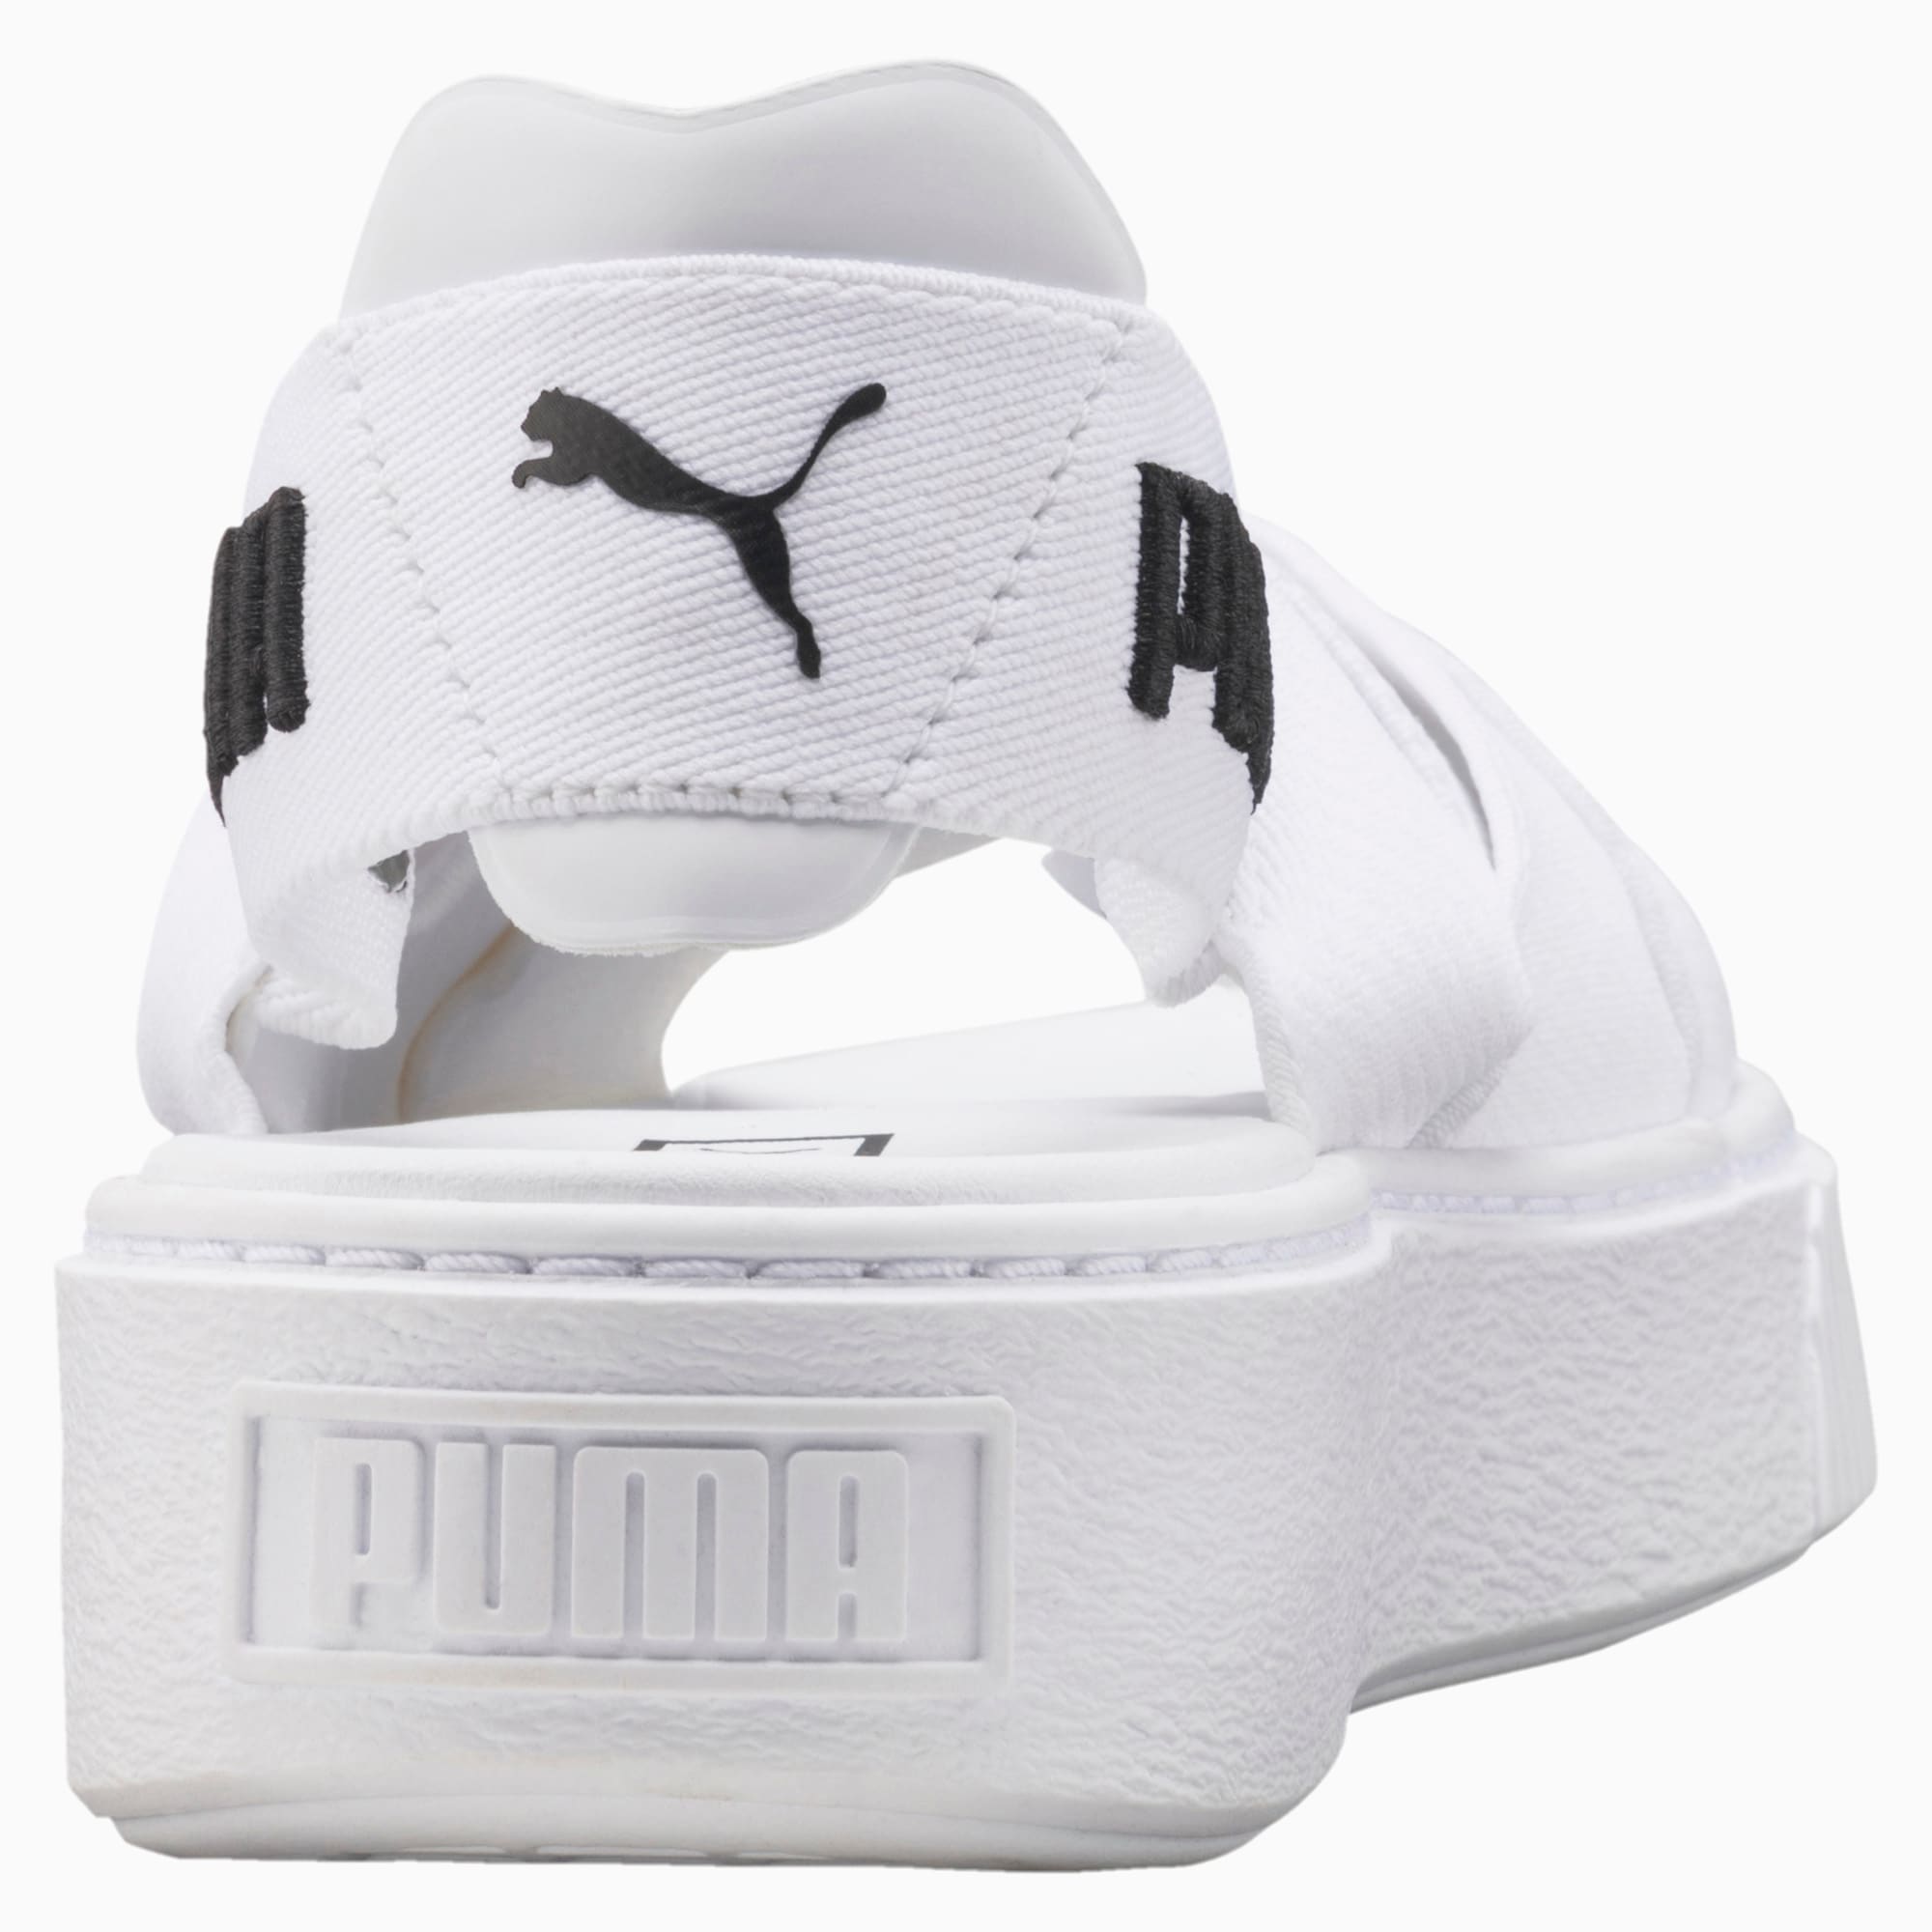 puma white platform sandals